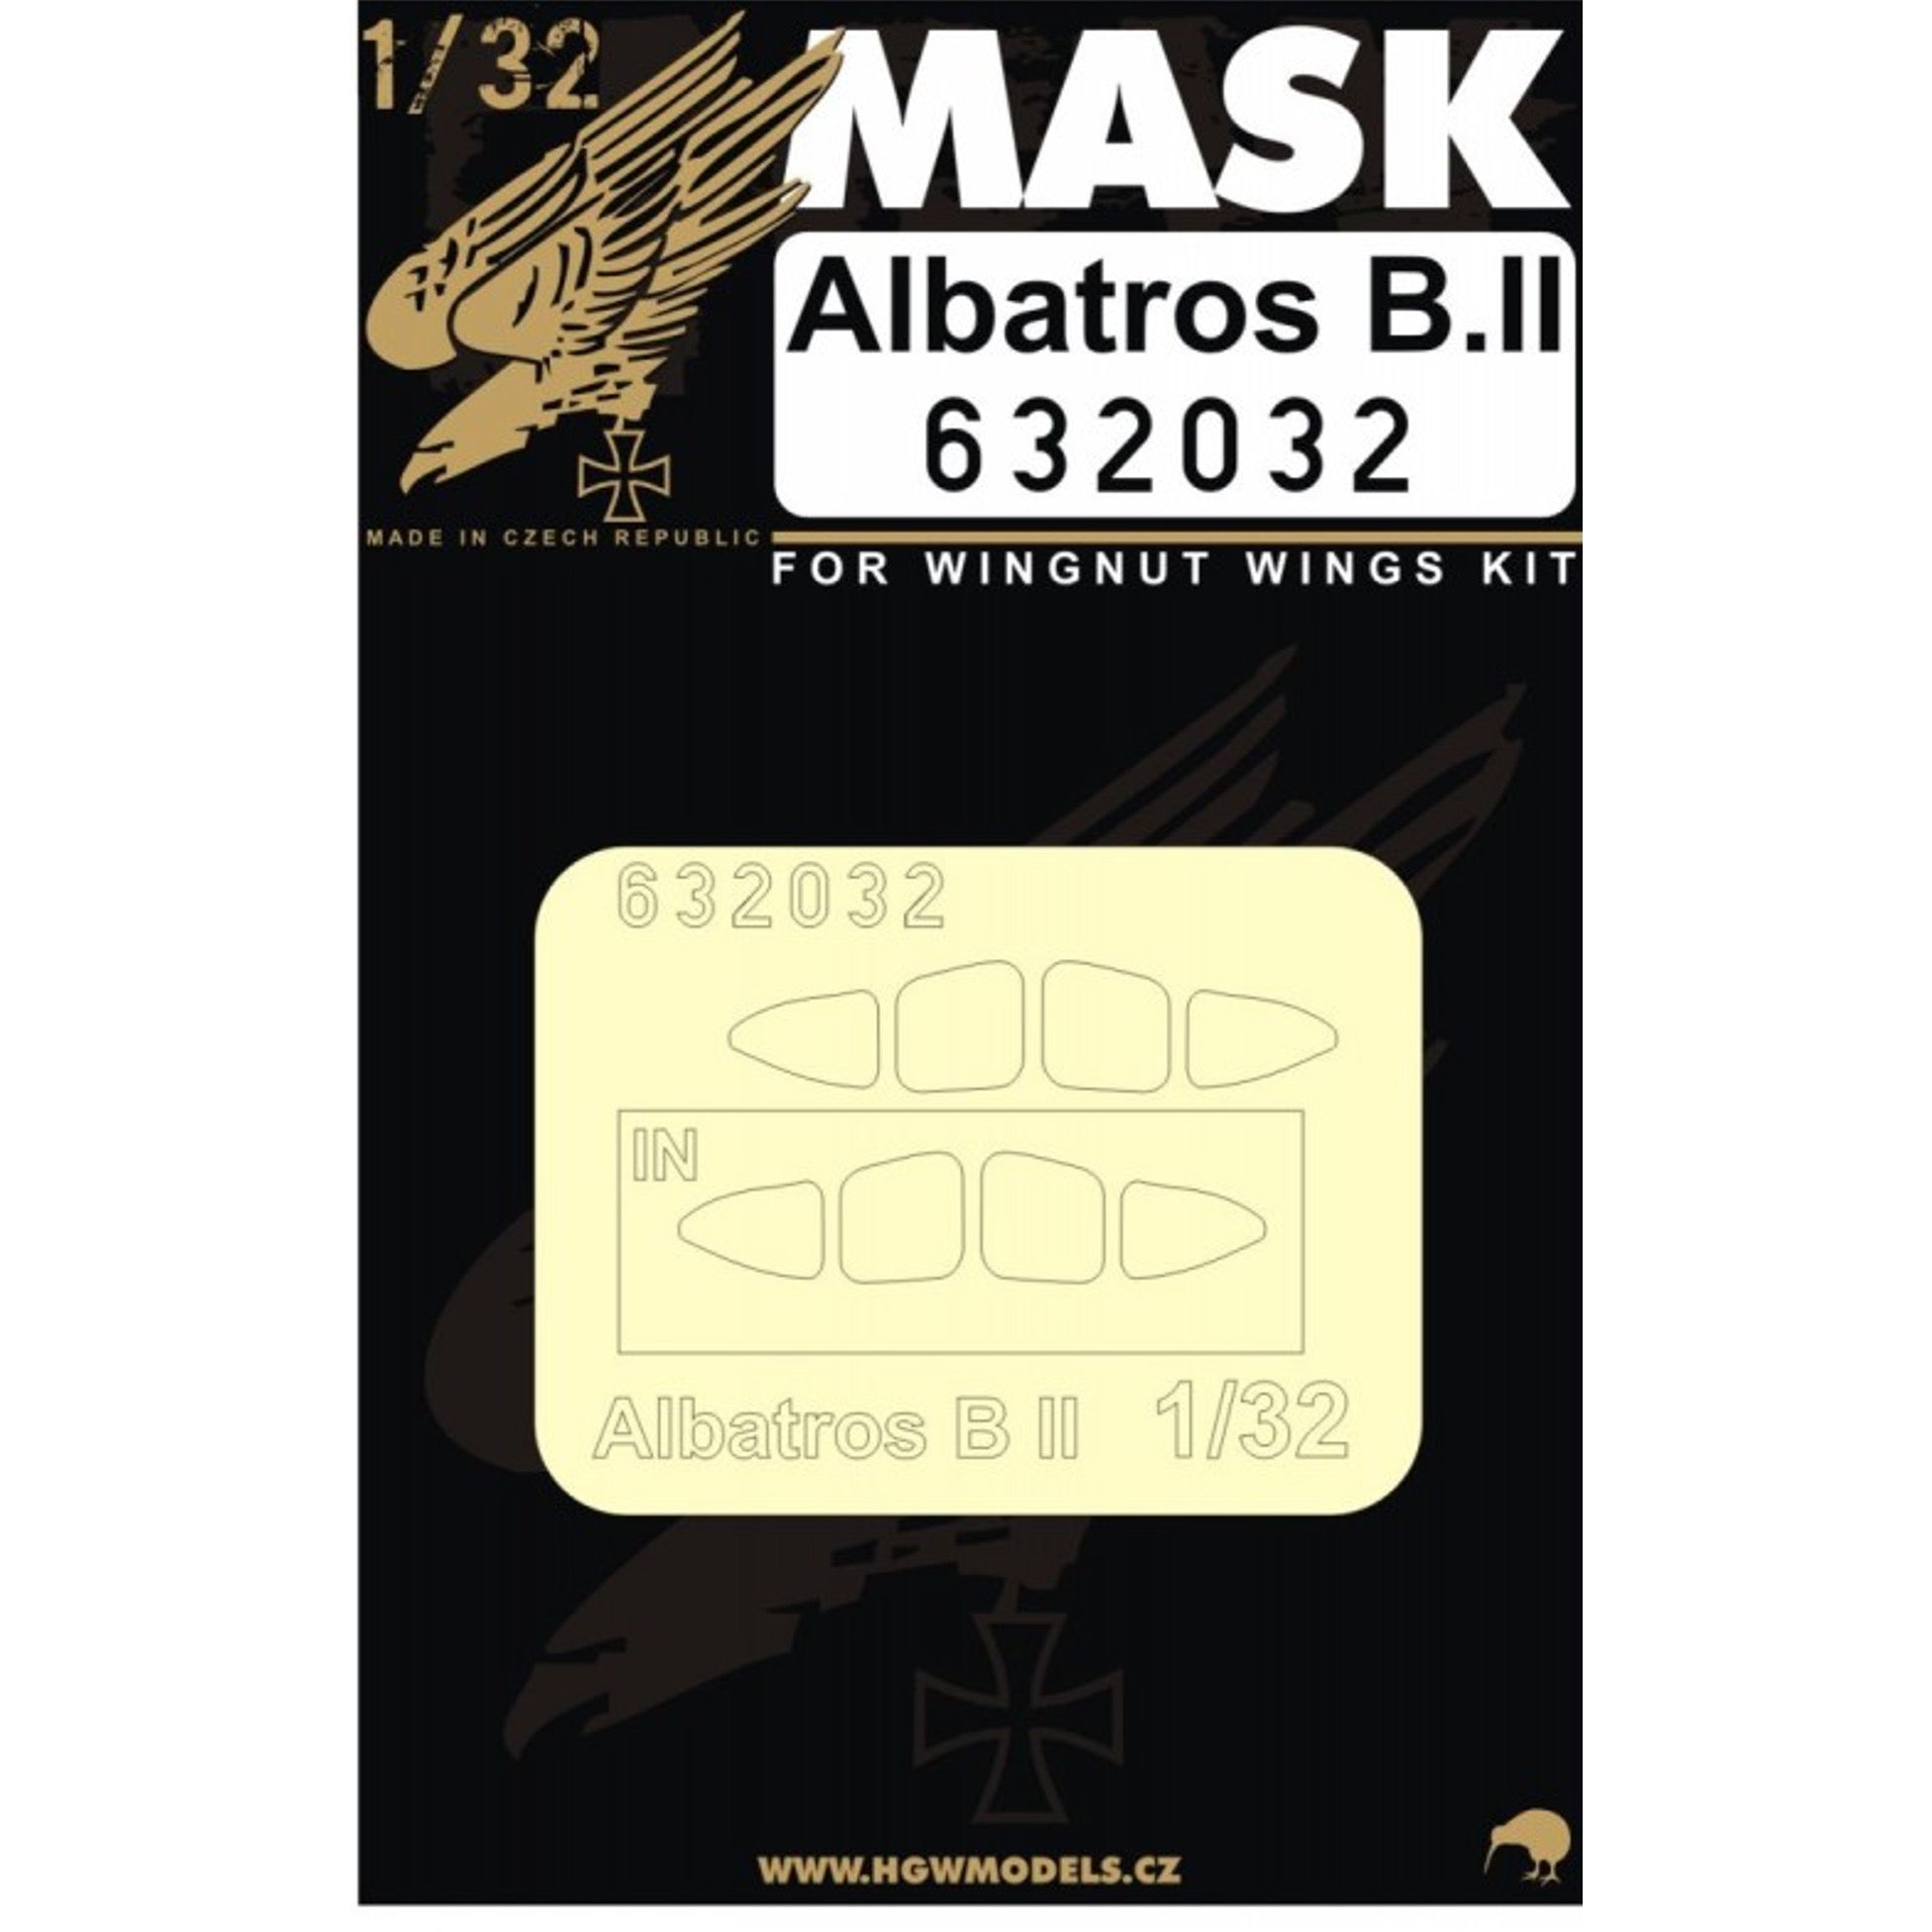 1/32 - Masks - Albatros B.II